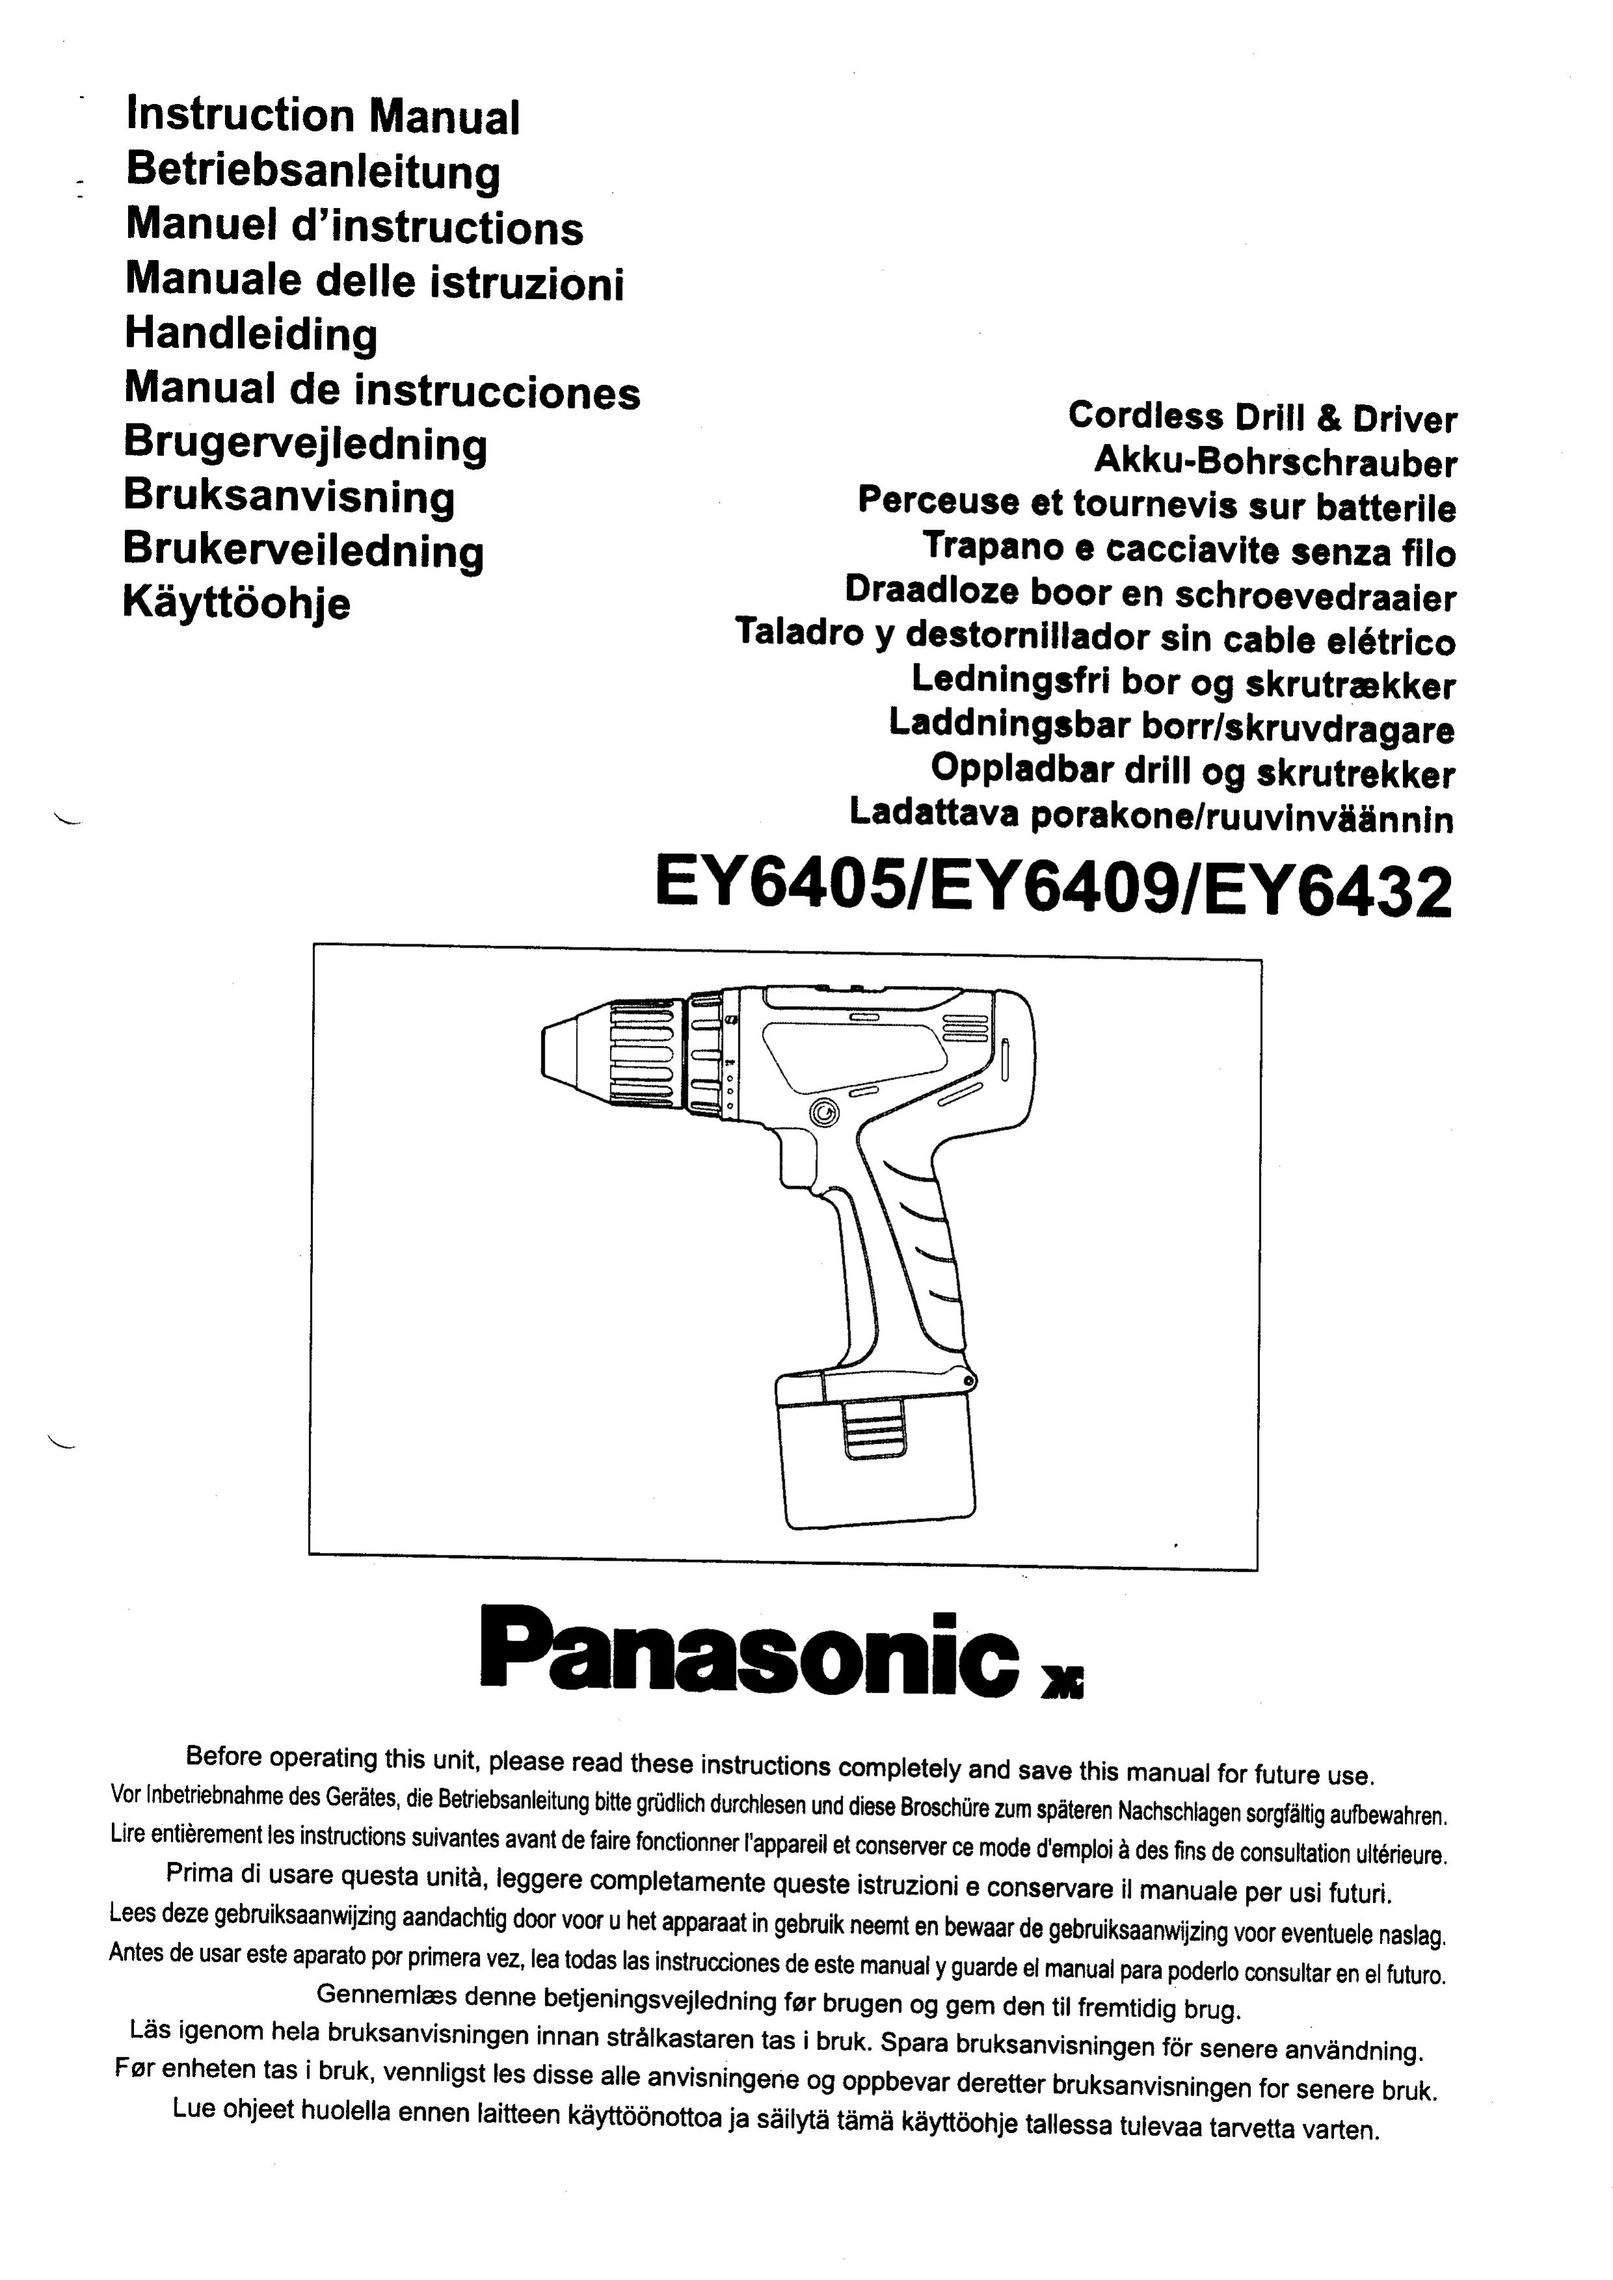 Panasonic EY6409 Drill User Manual